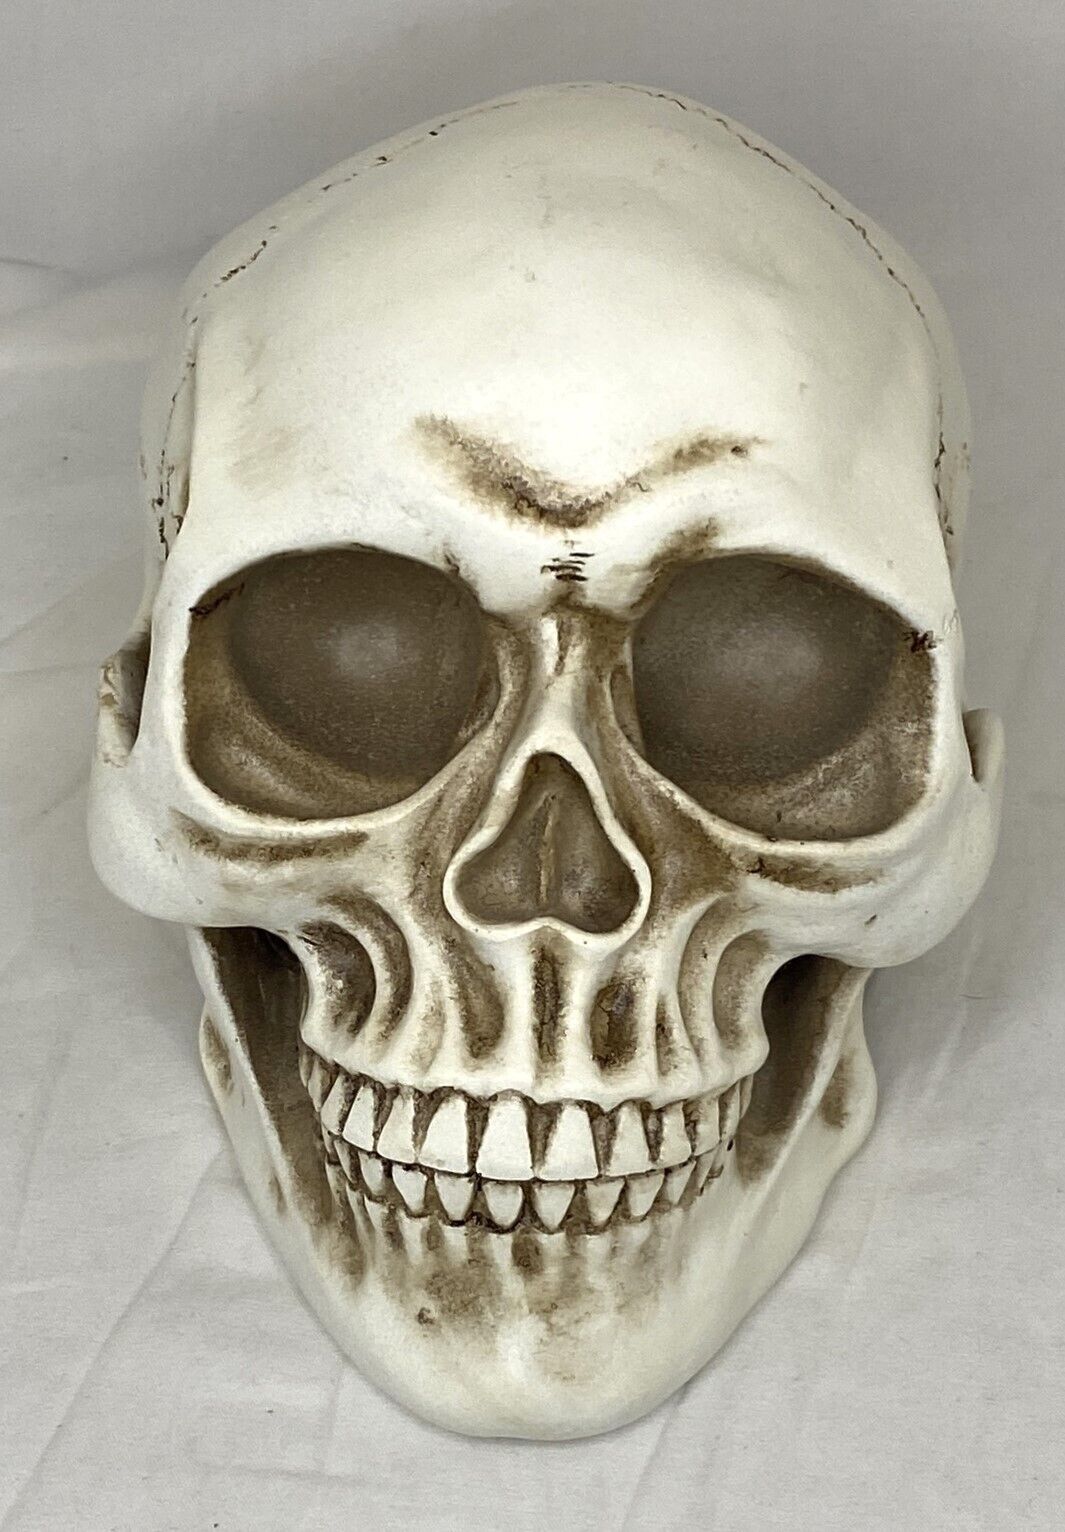 READAEER 1:1 Human Size Skull Model Realistic